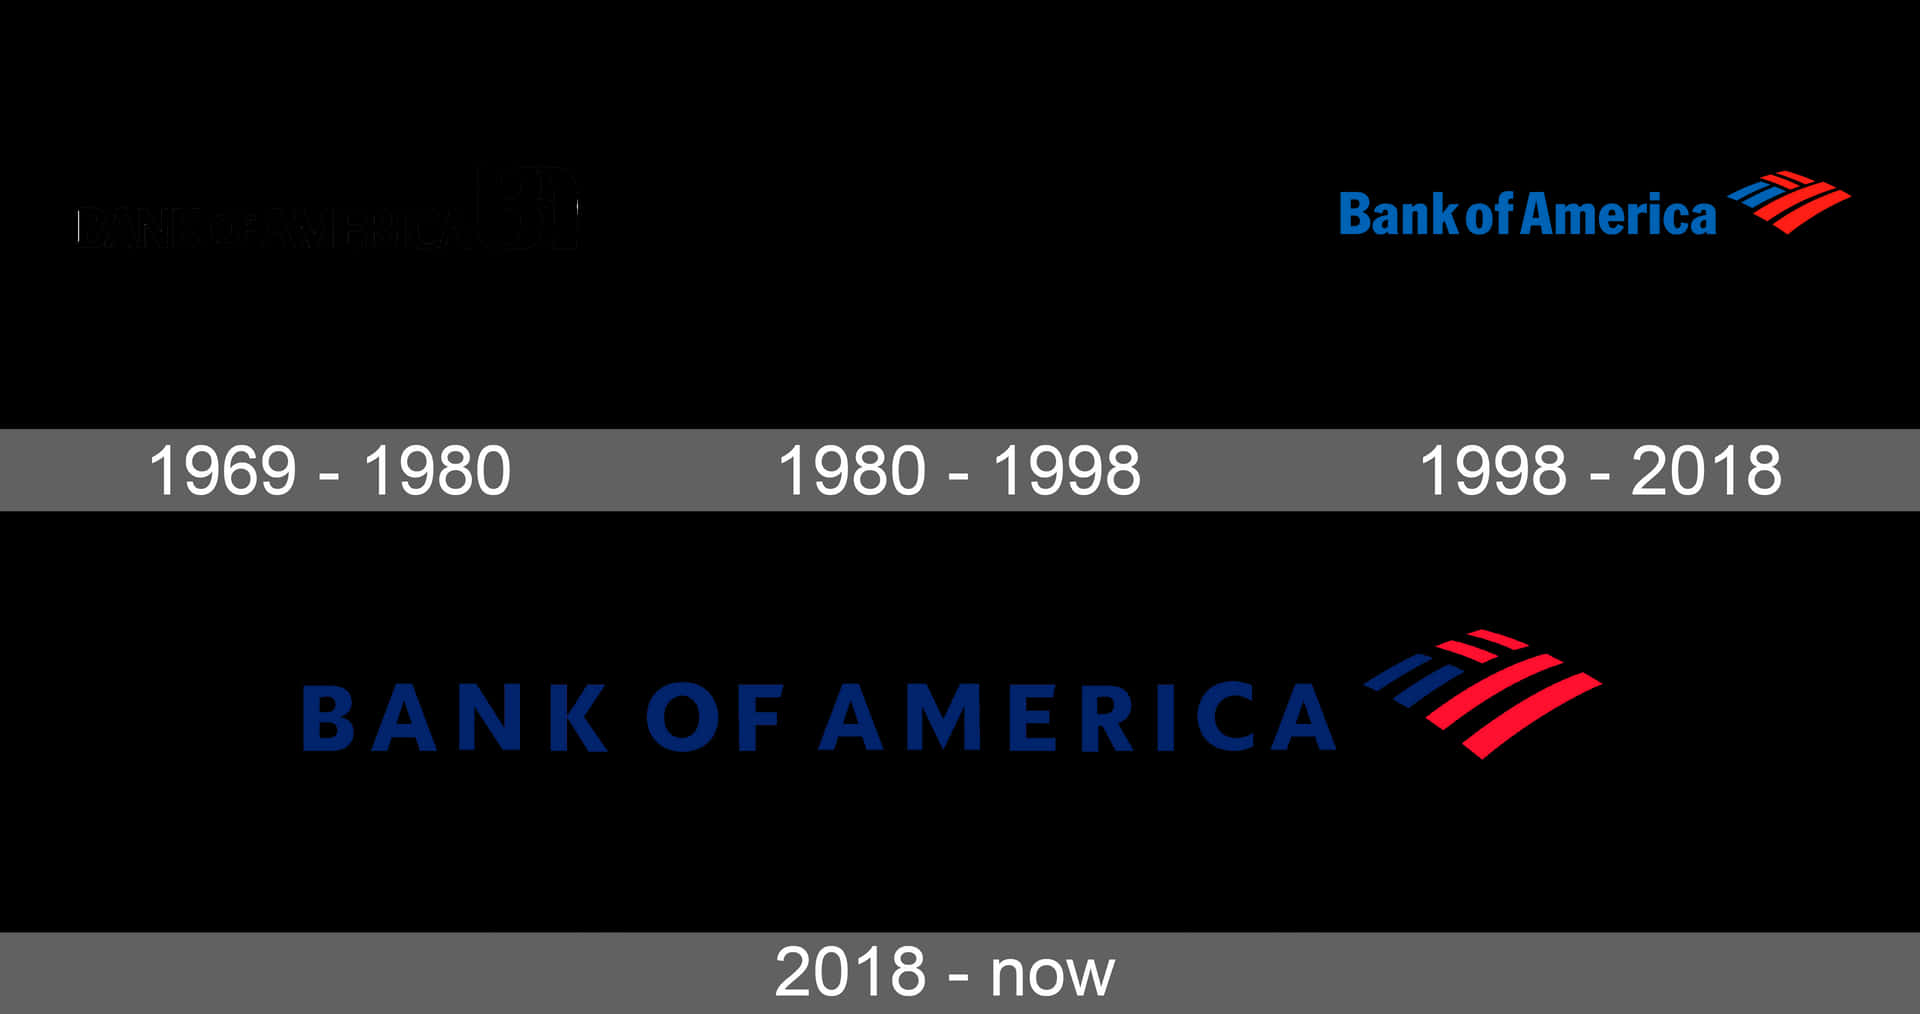 Bankamed Bank Of America